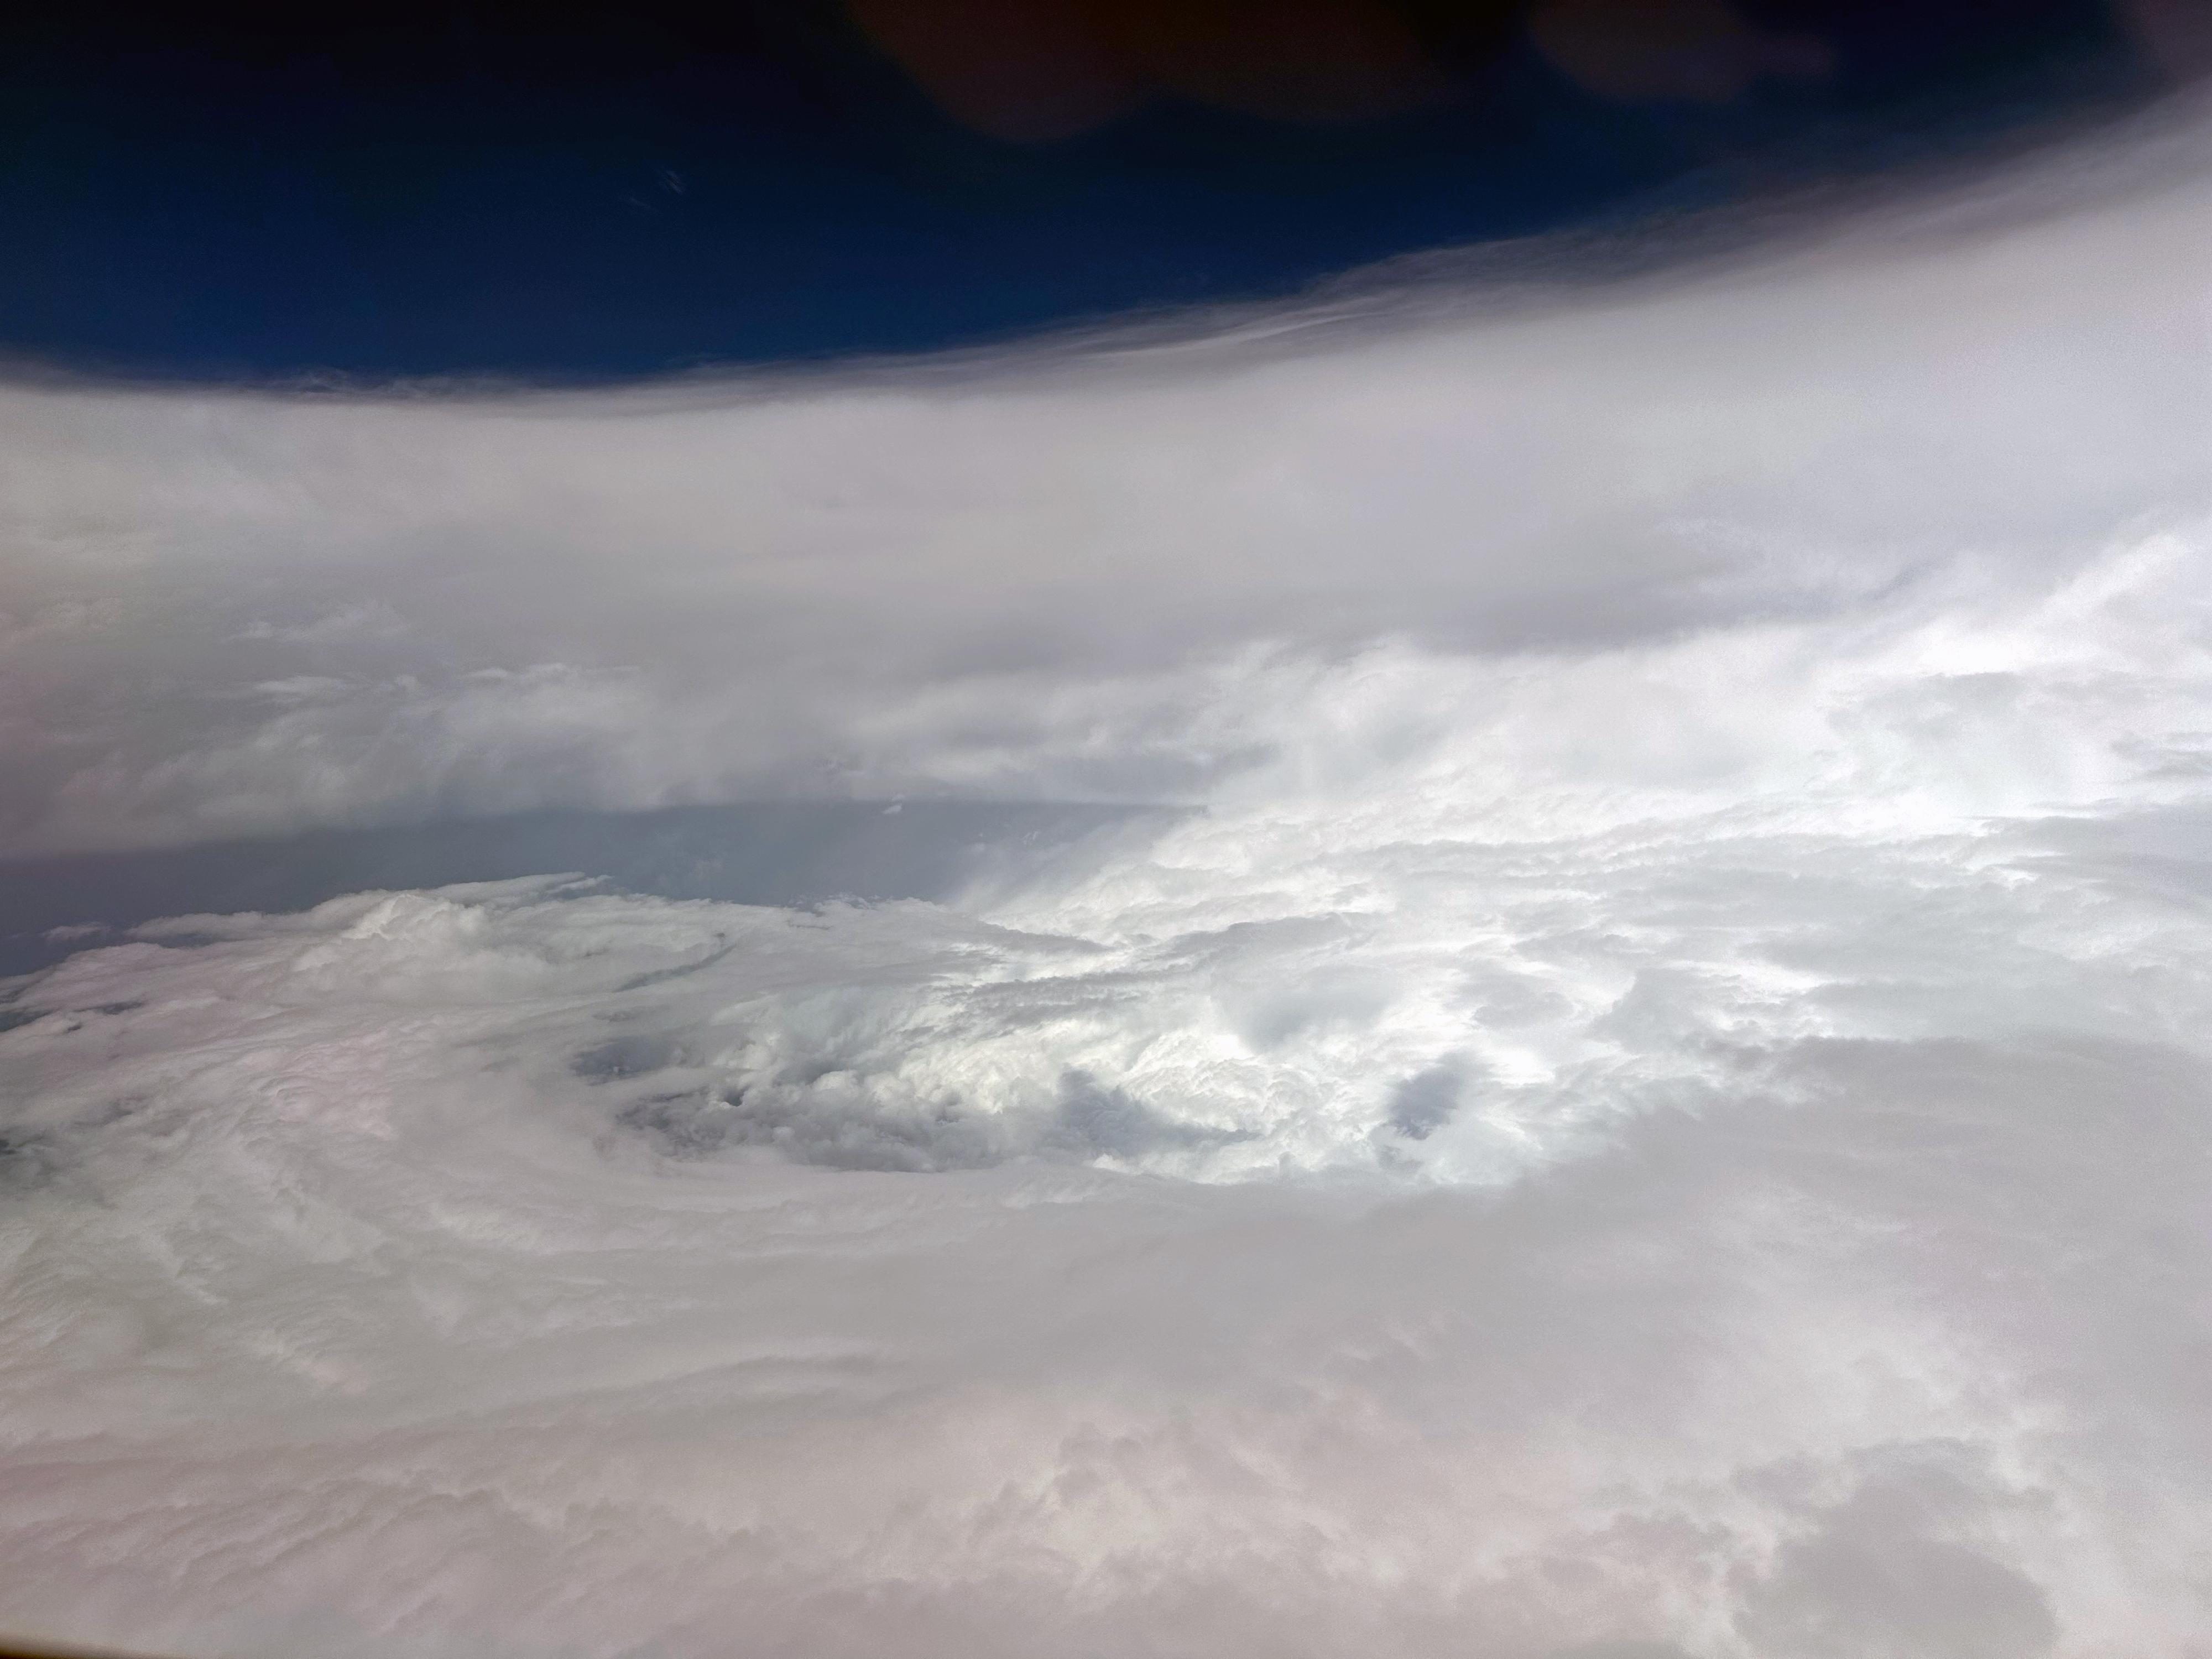 The eyewall of super typhoon Saola was well defined.